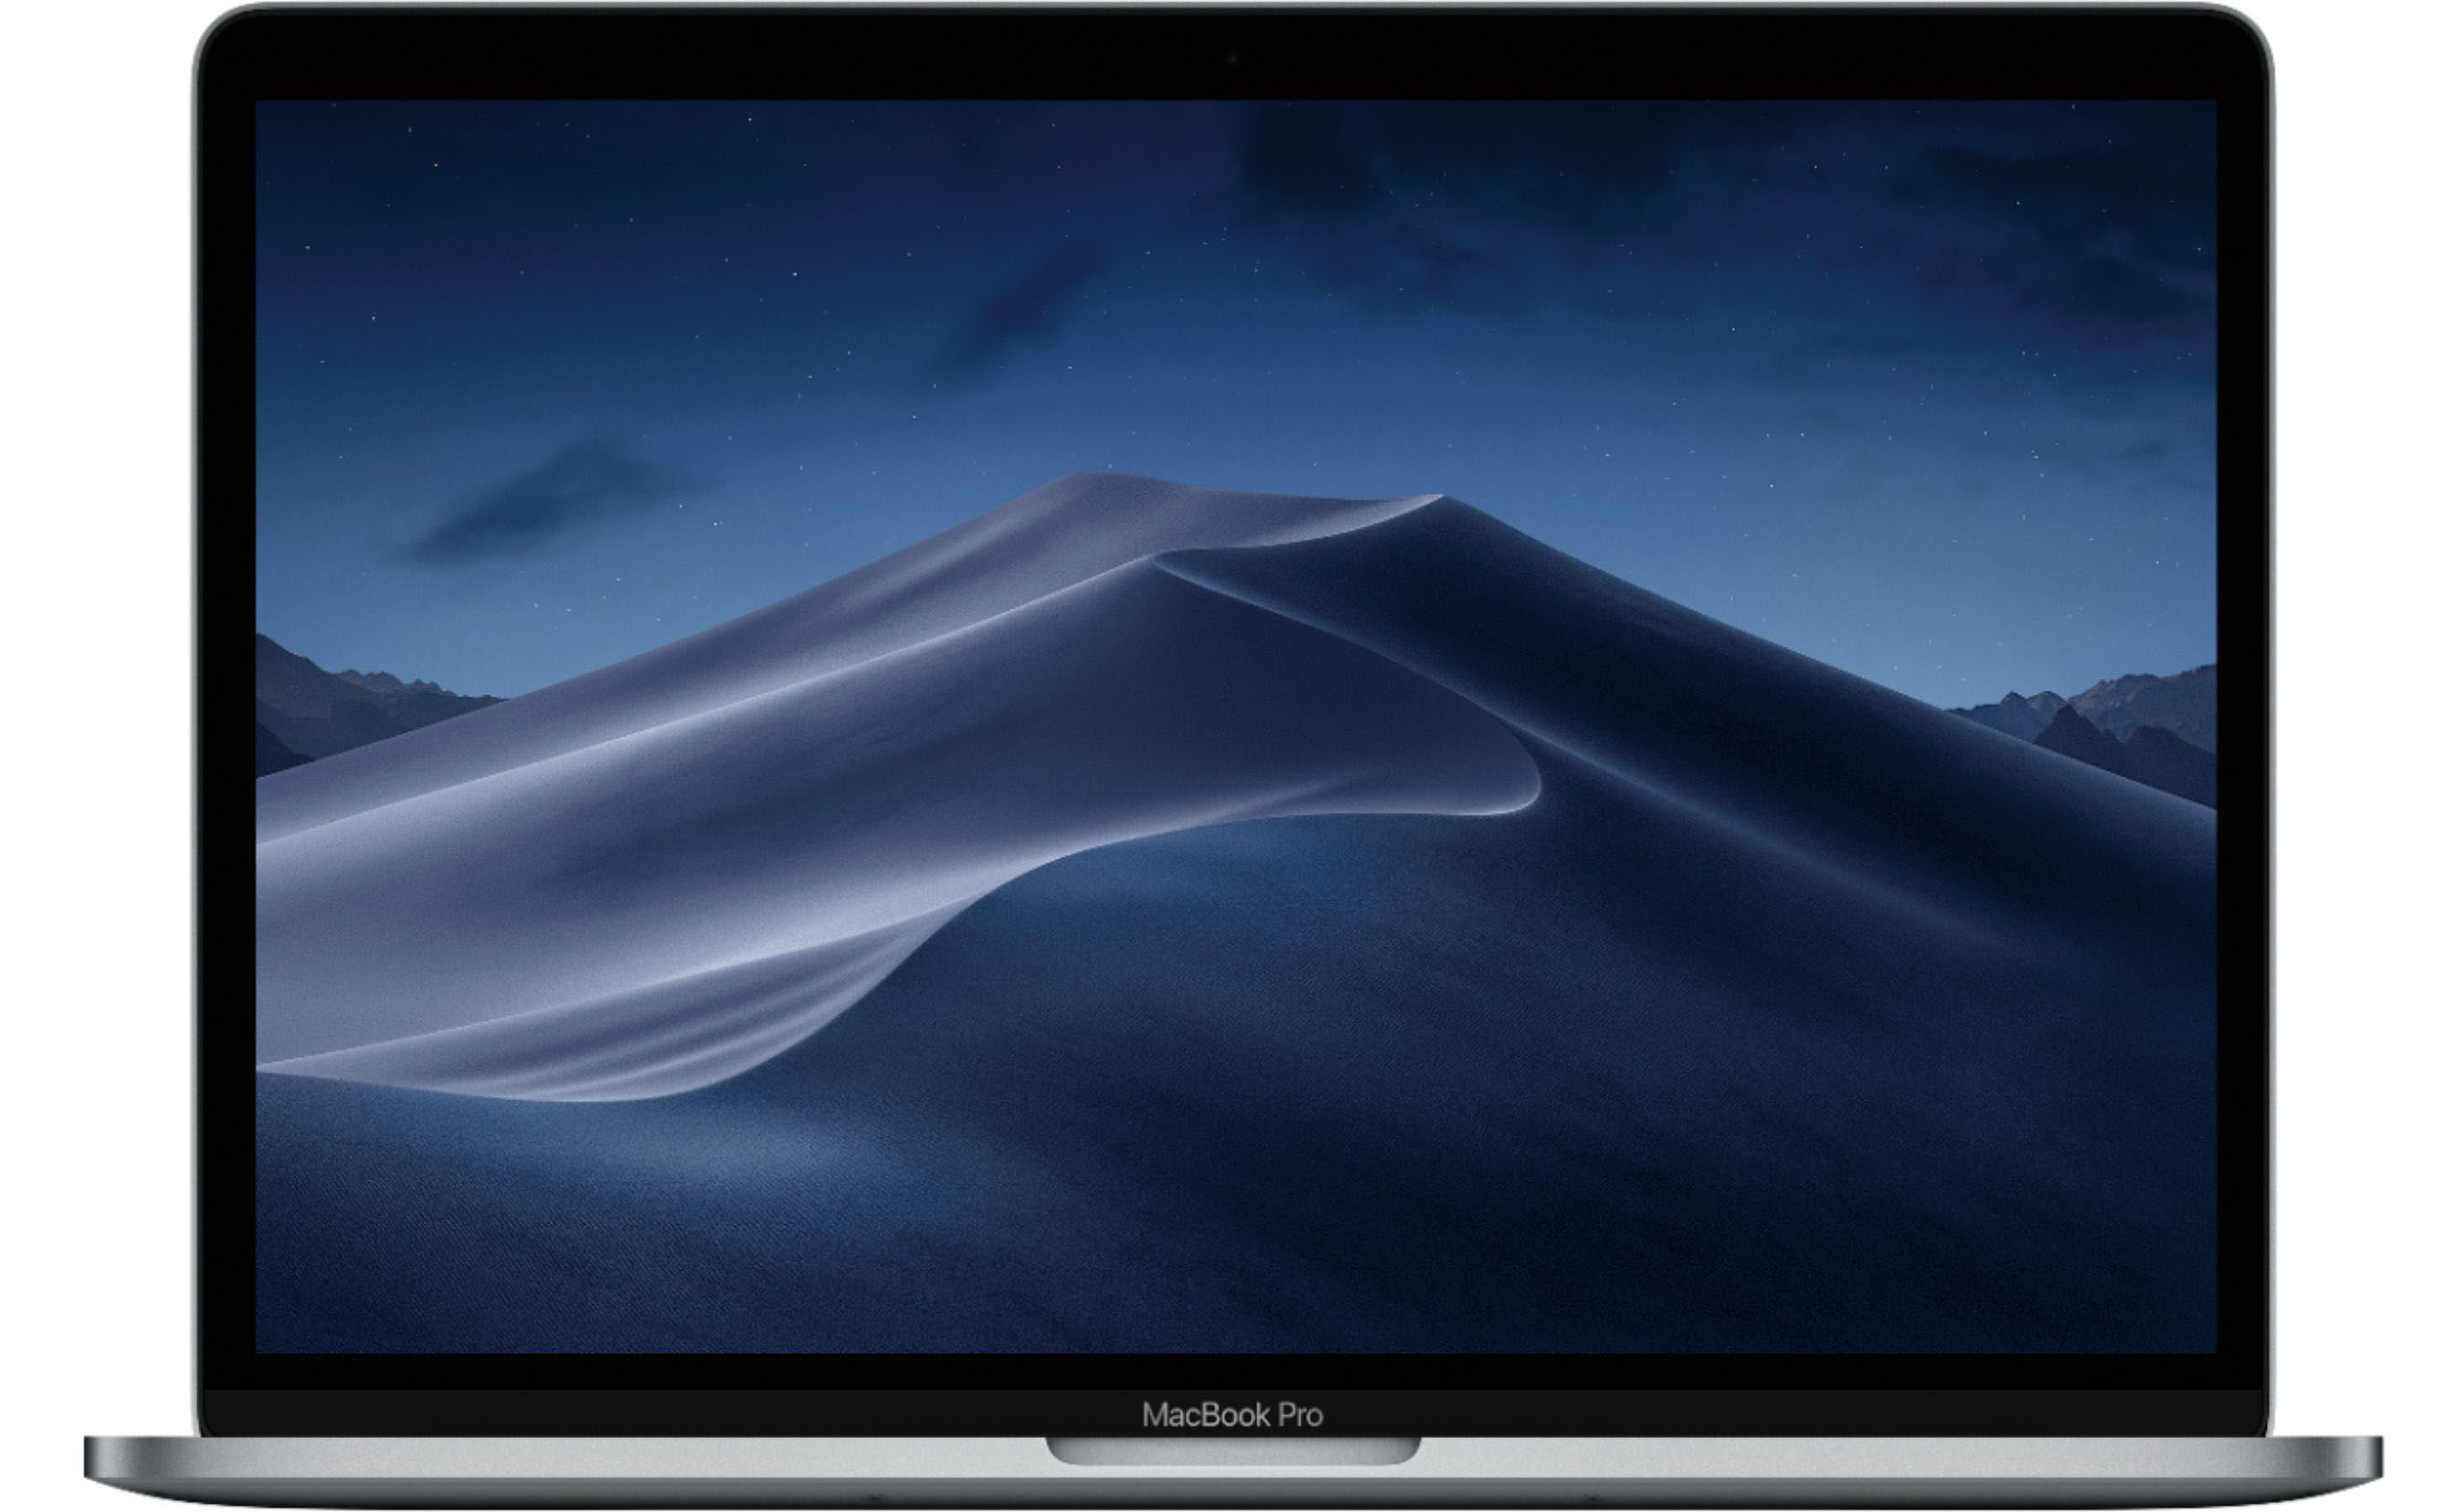 Apple - Geek Squad Certified Refurbished MacBook Pro® - 13" Display - Intel Core i5 - 8 GB Memory - 256GB Flash Storage - Space Gray